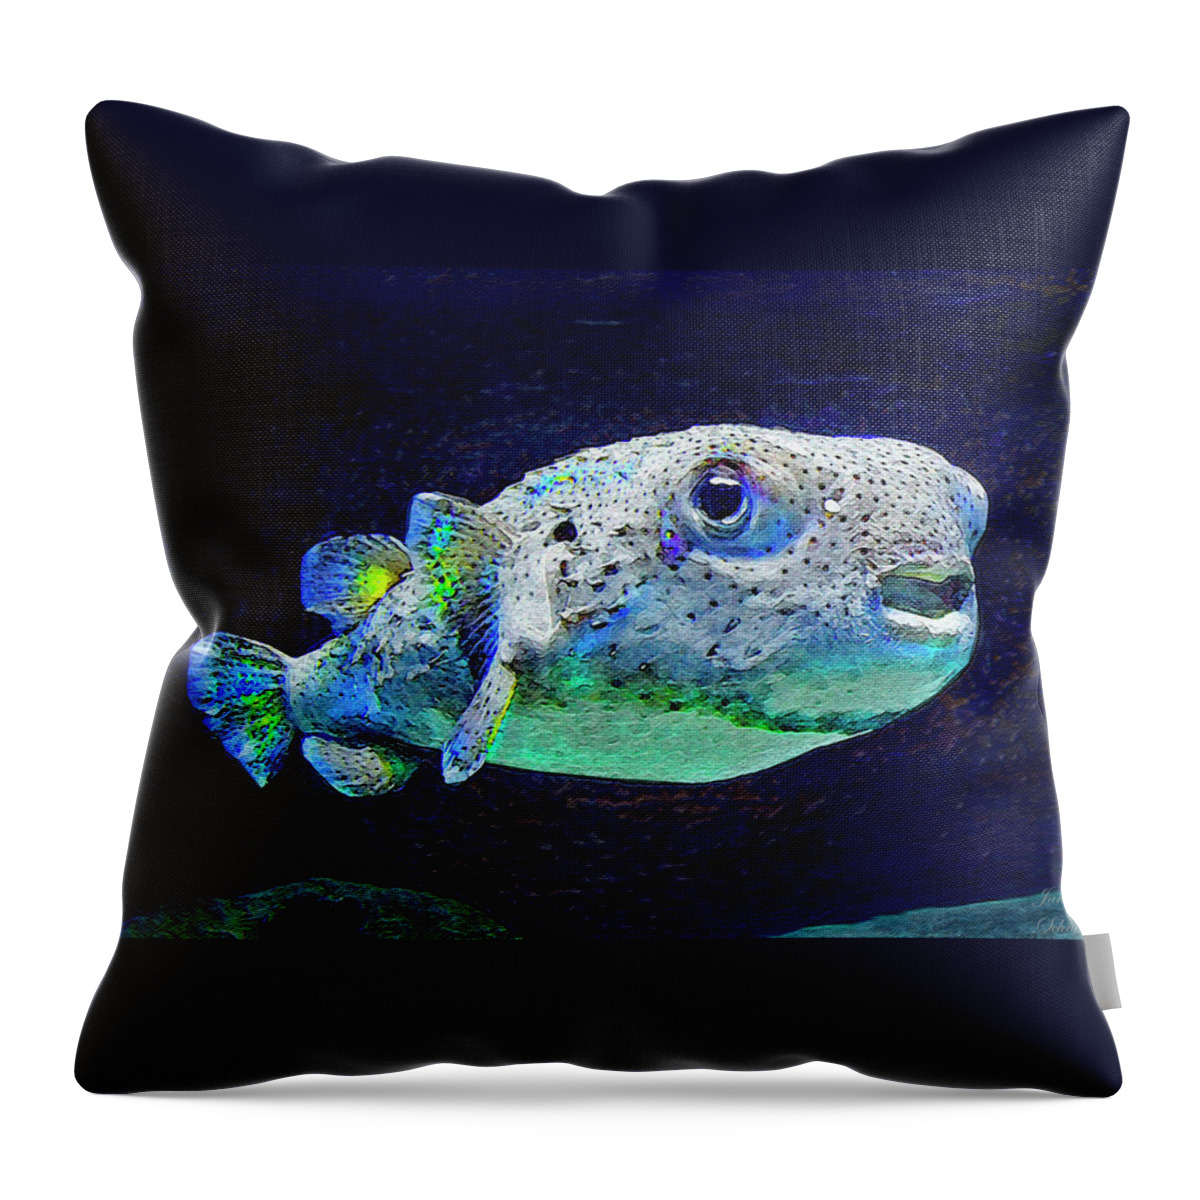 Puffer Fish Throw Pillow featuring the digital art Puffer Fish by Jane Schnetlage